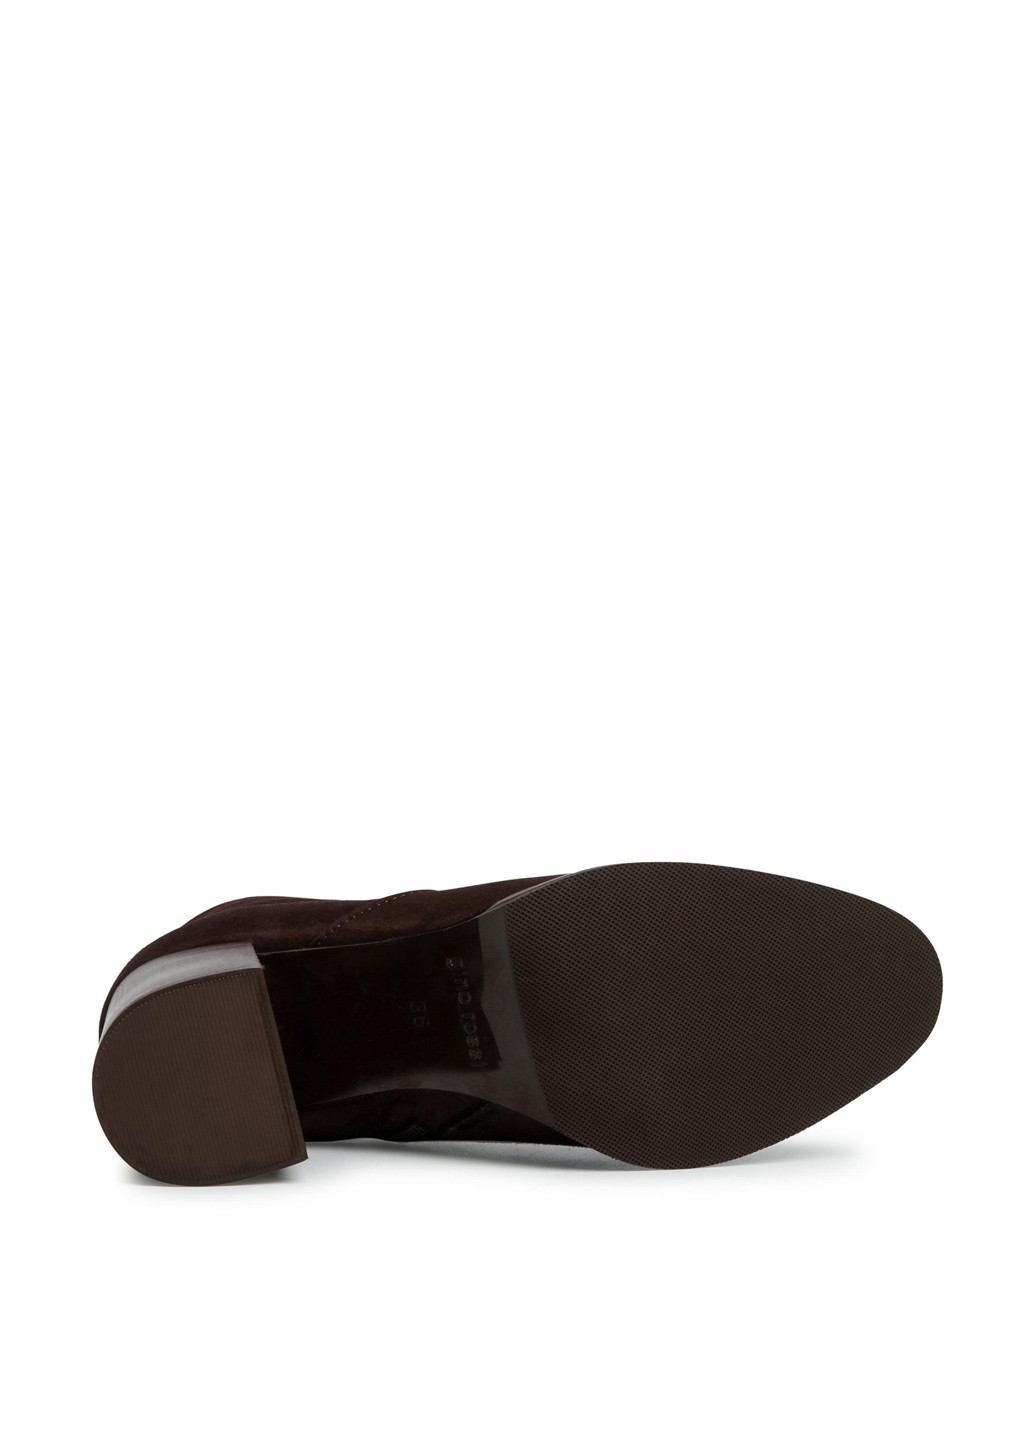 Темно-коричневые осенние черевики gino rossi 18401 Gino Rossi